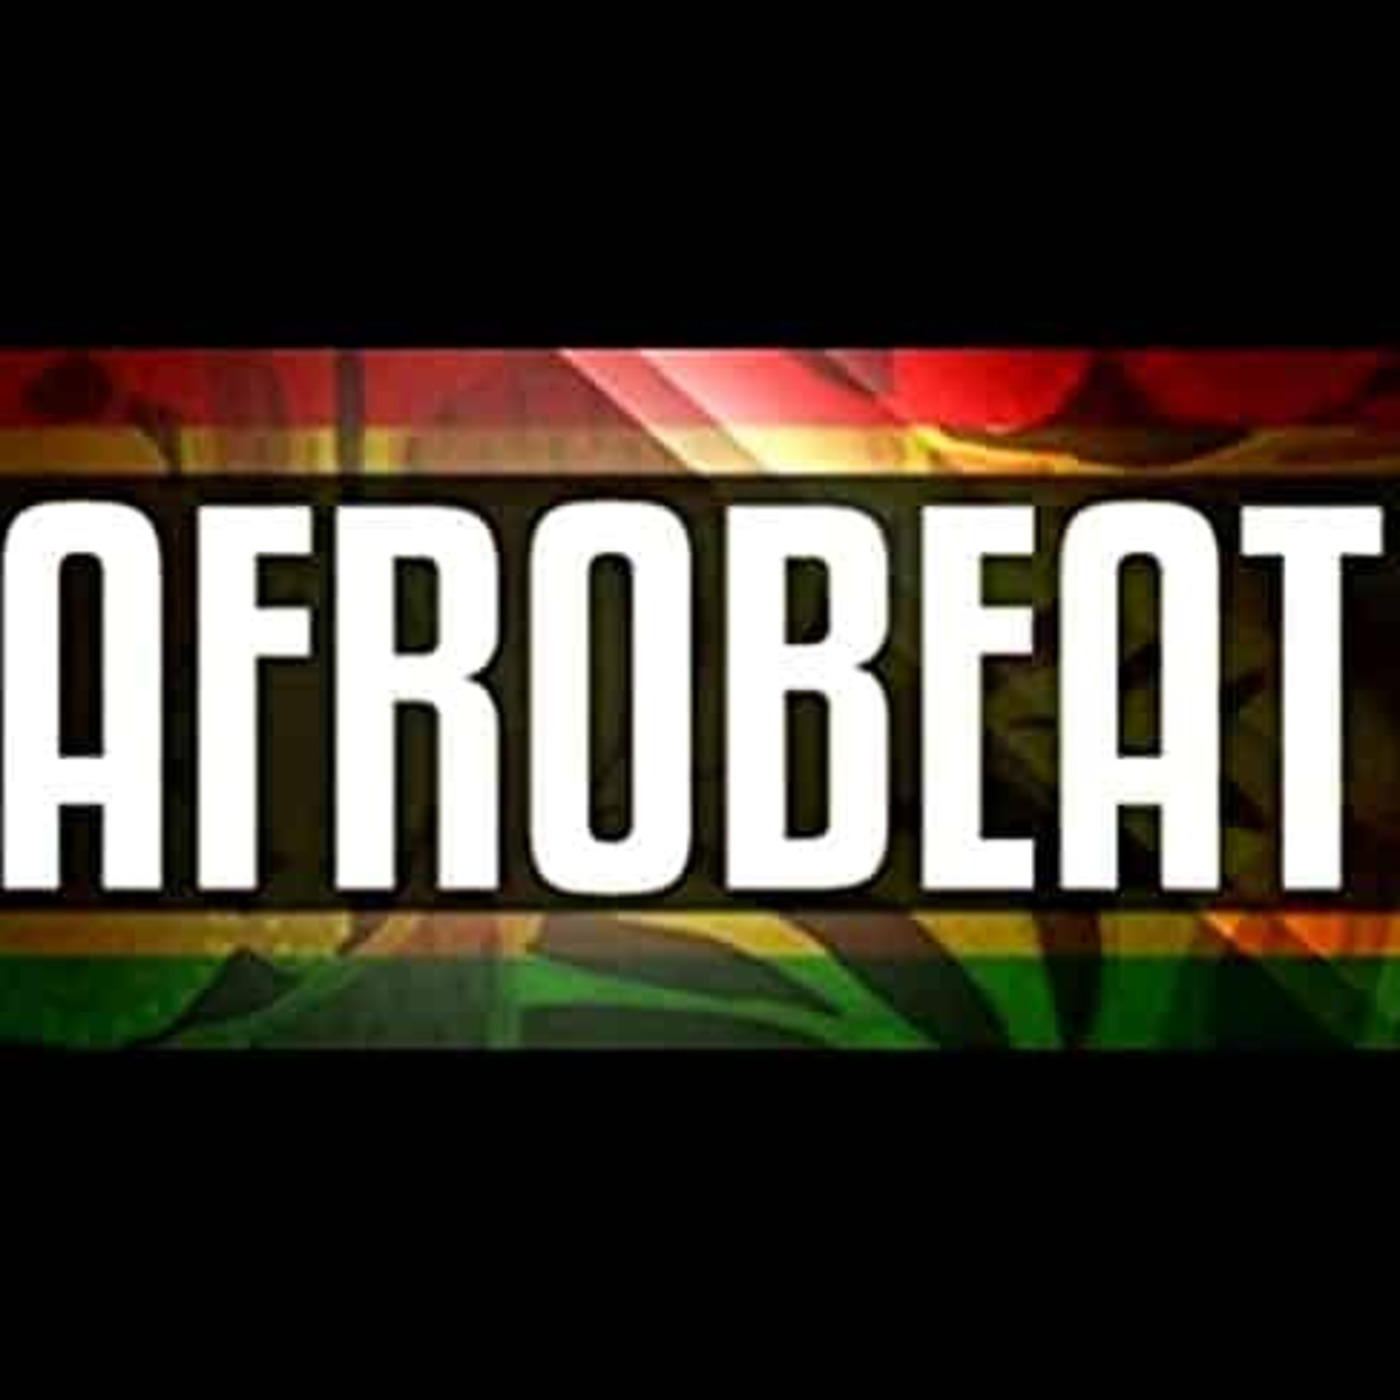 Episode 7: Everyone Loves AfroBeats